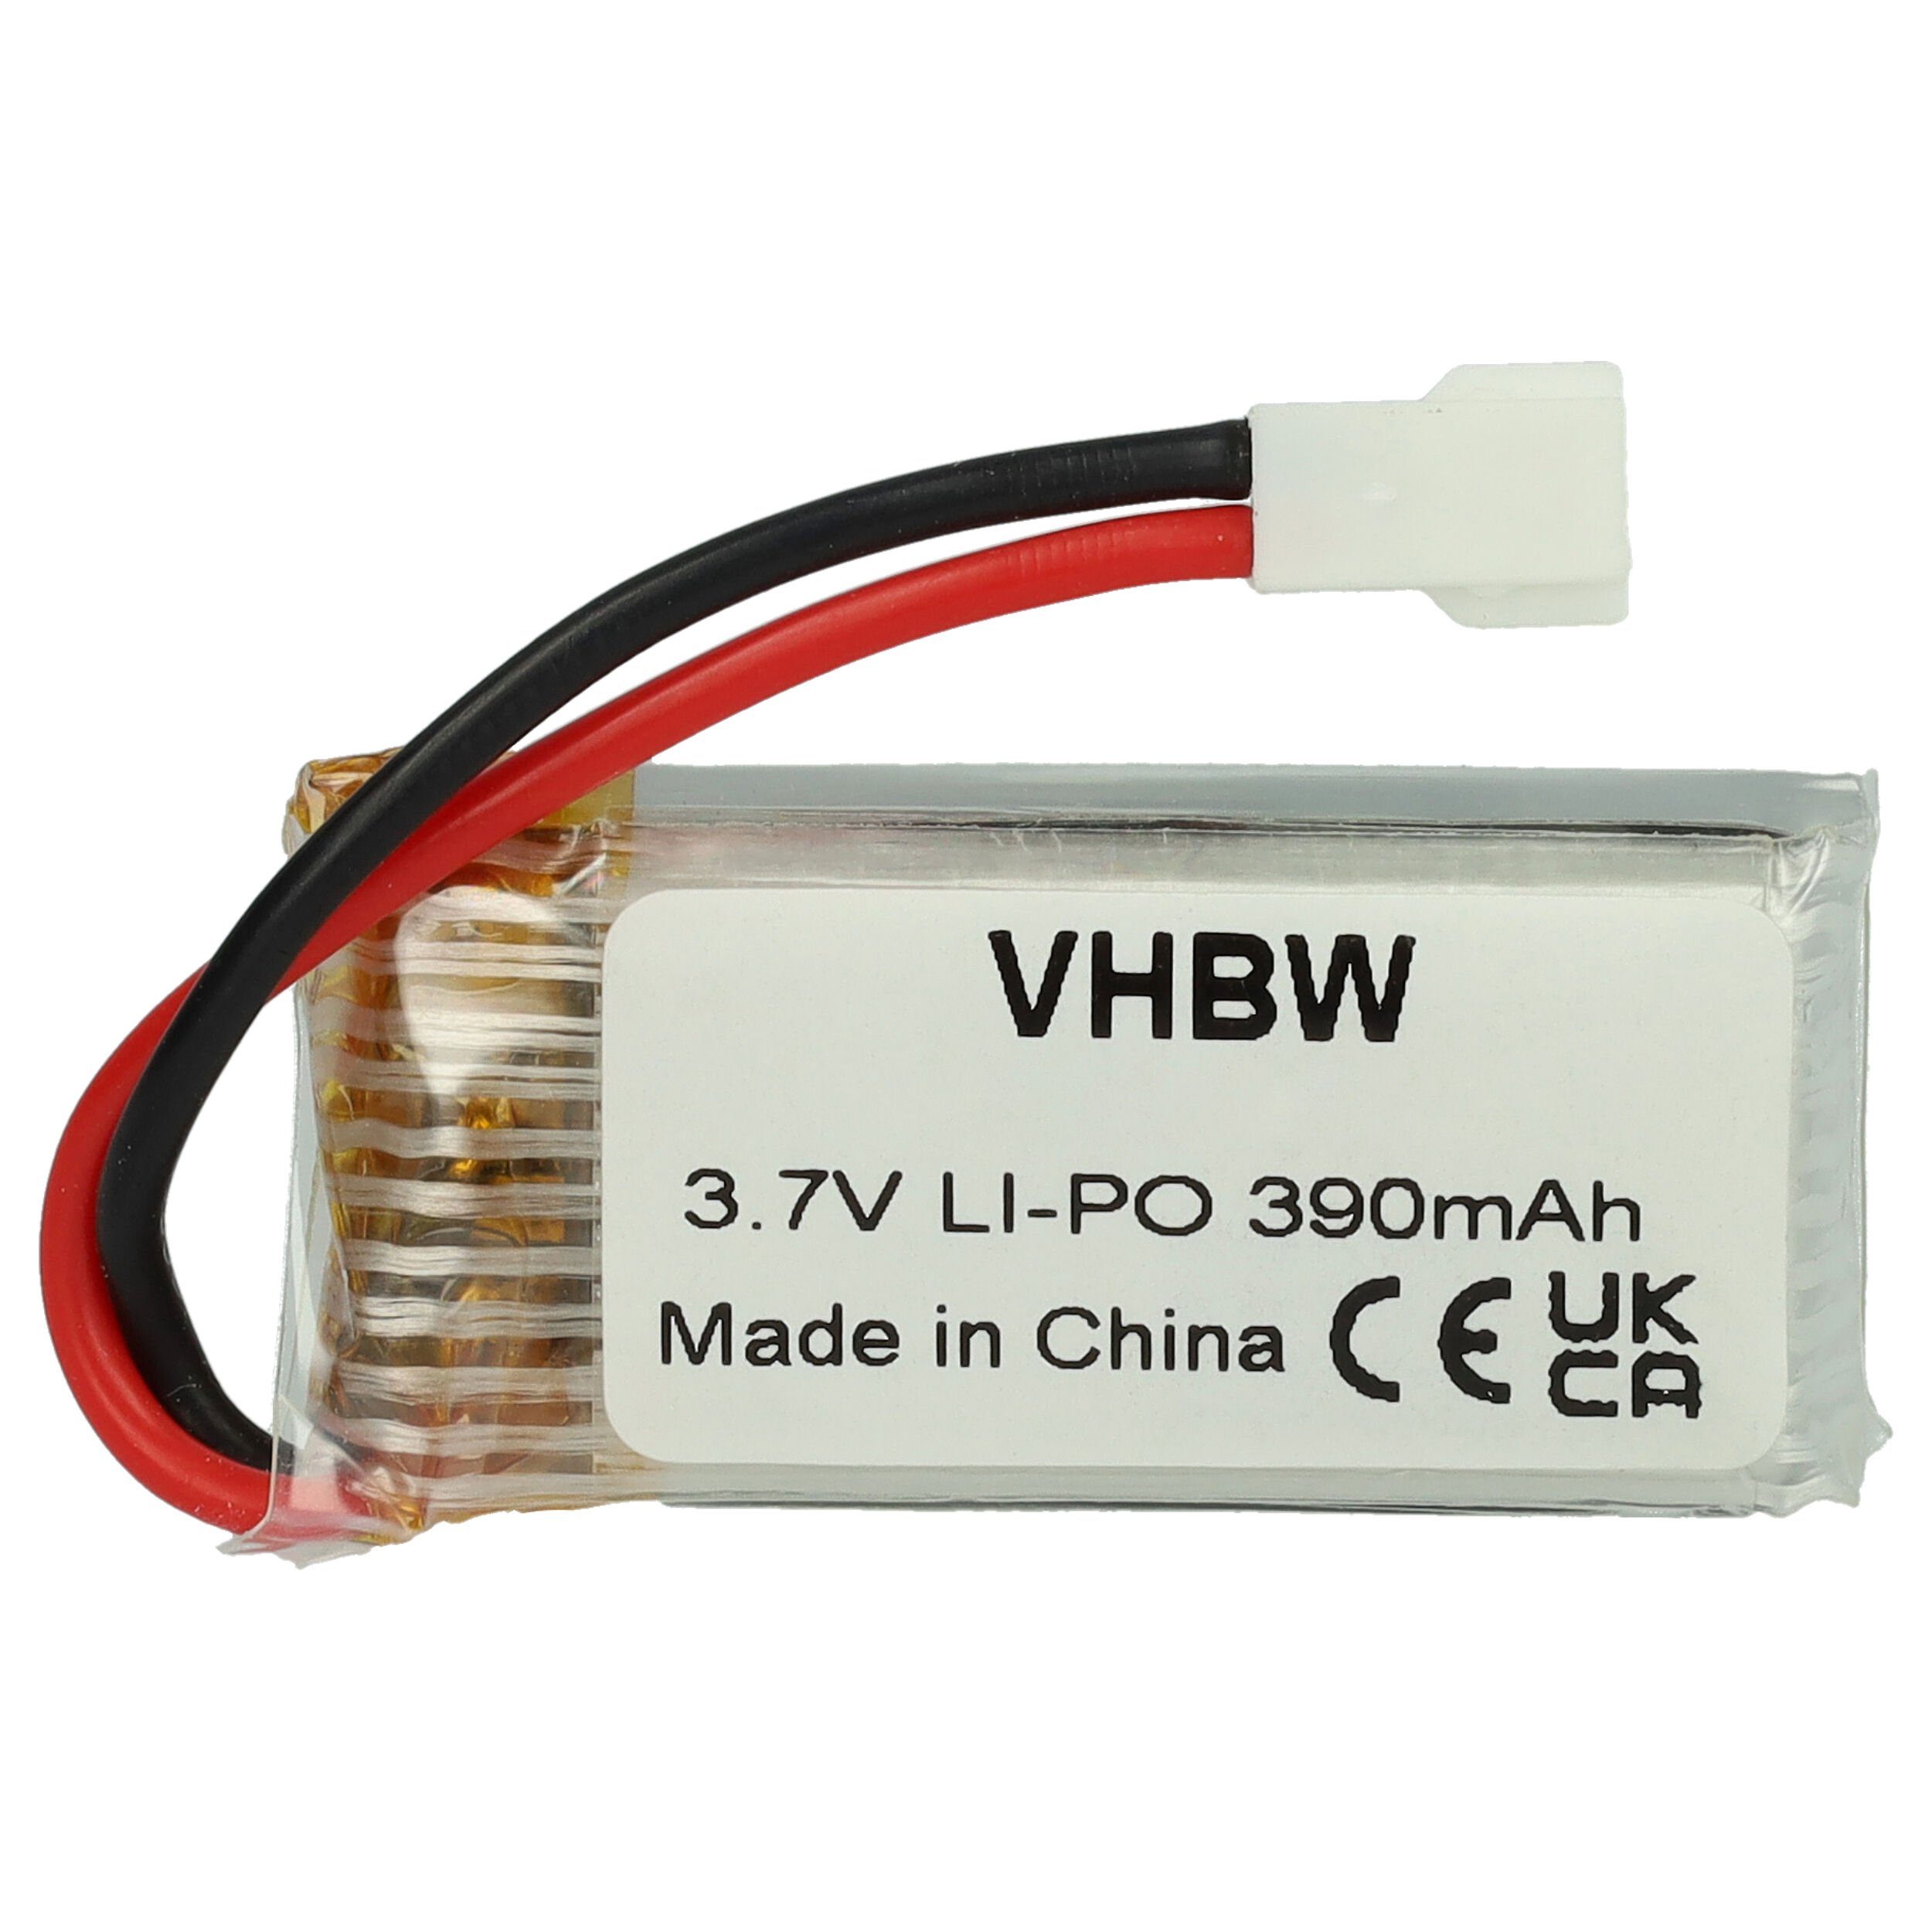 vhbw kompatibel mit Hubsan H107D, X4 H107 Drohnen-Akku Li-Polymer 390 mAh (3,7 V)